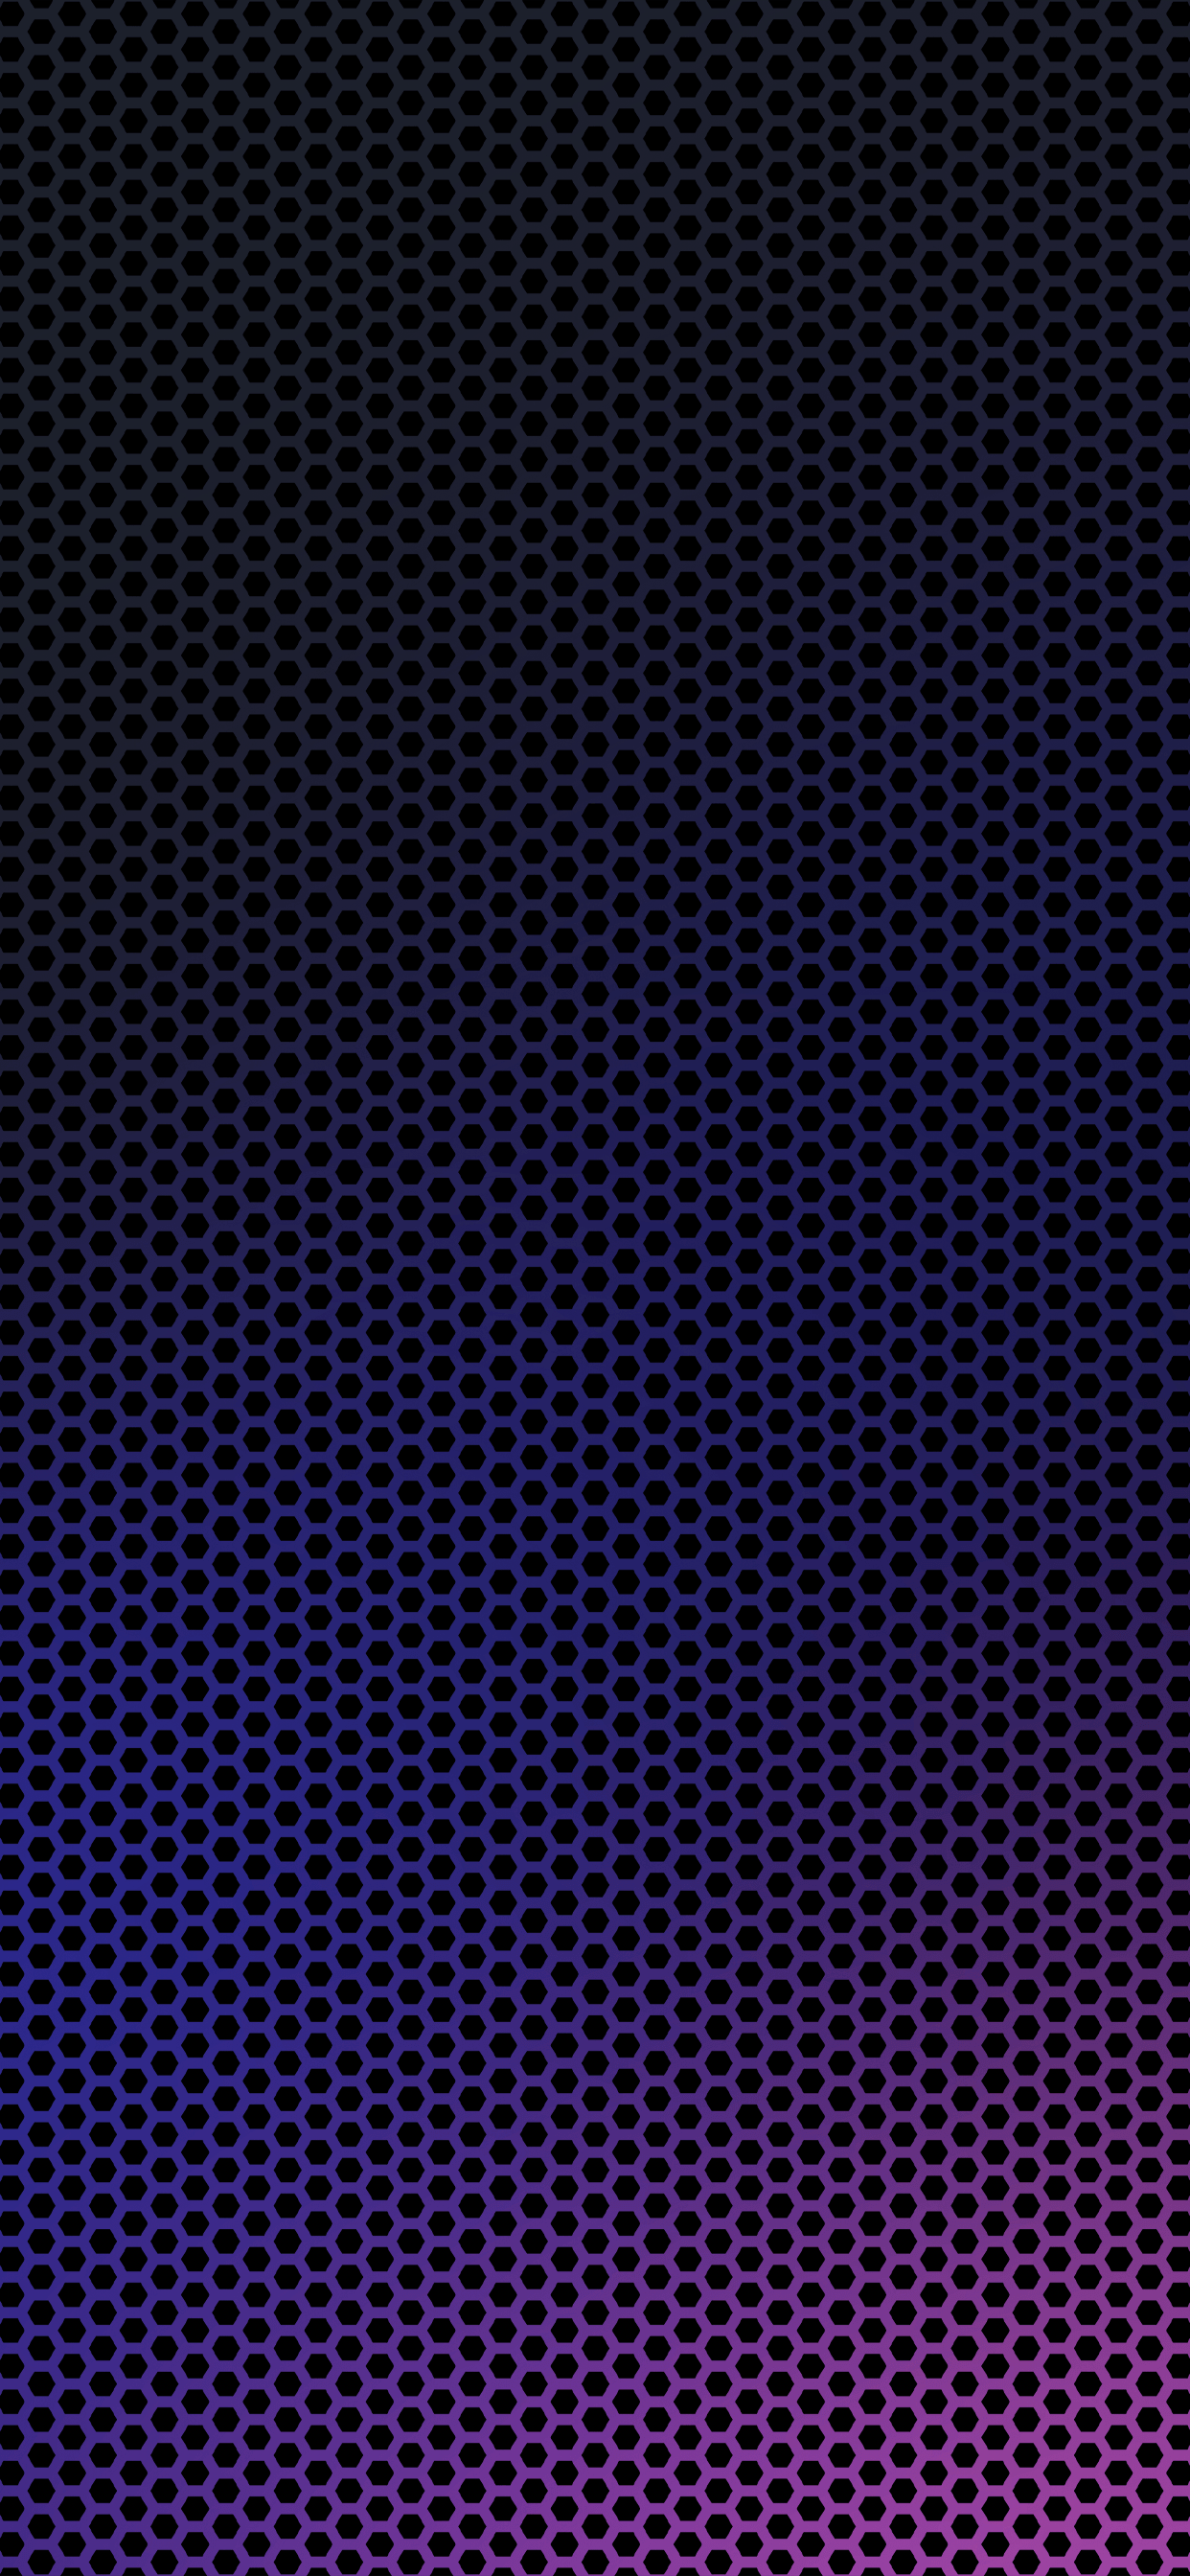 Dark pattern wallpaper for iPhone